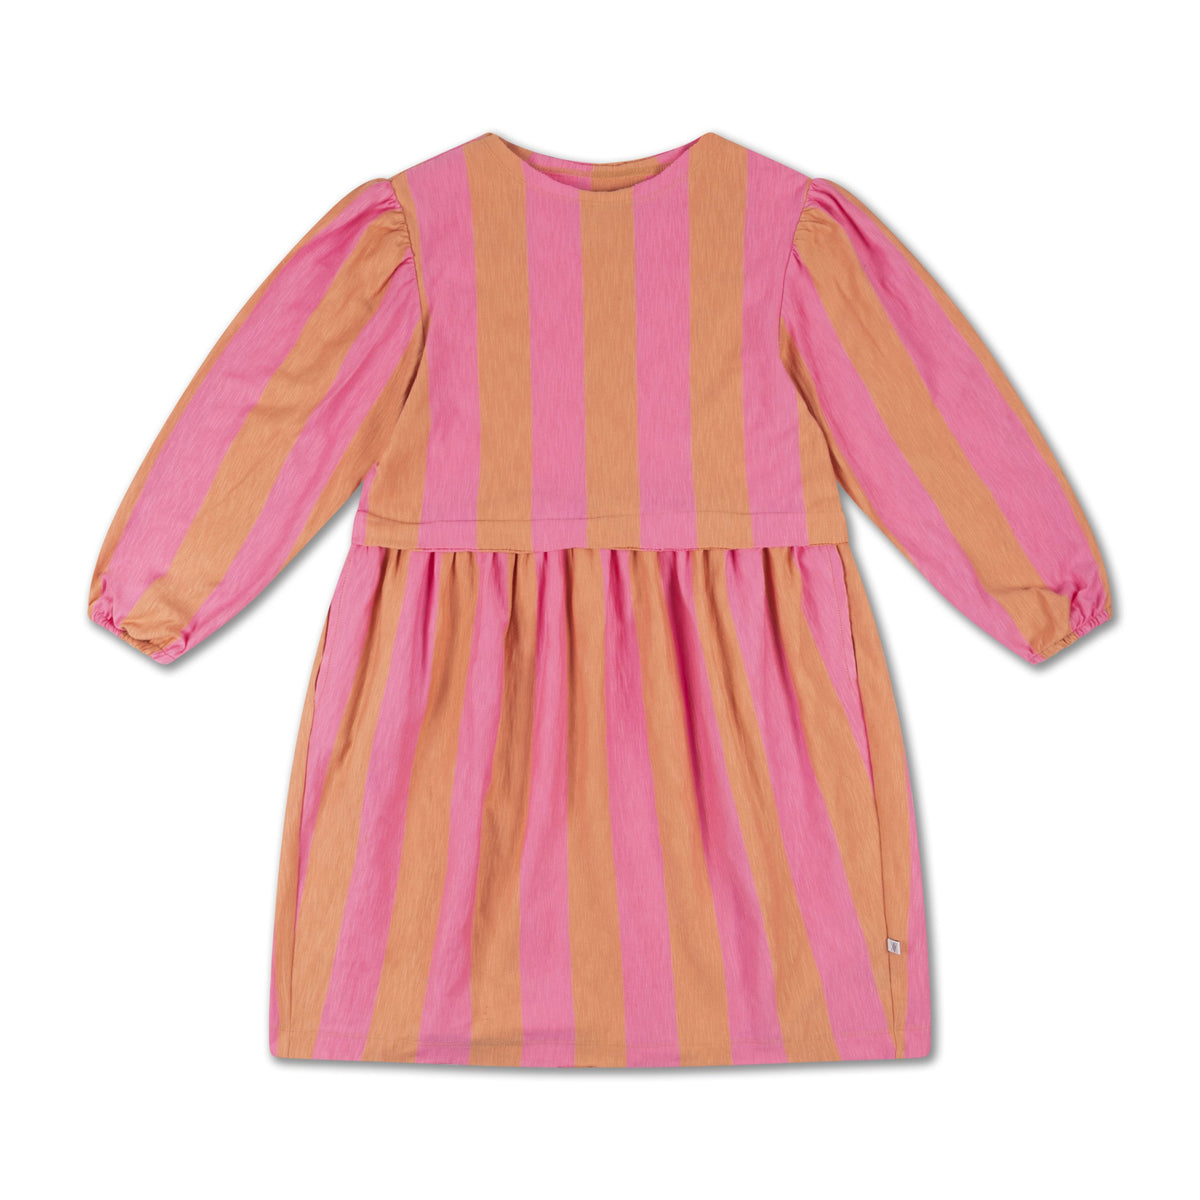 1351_027c3c9e54-36-at-ease-dress-pink-coral-block-stripe-original